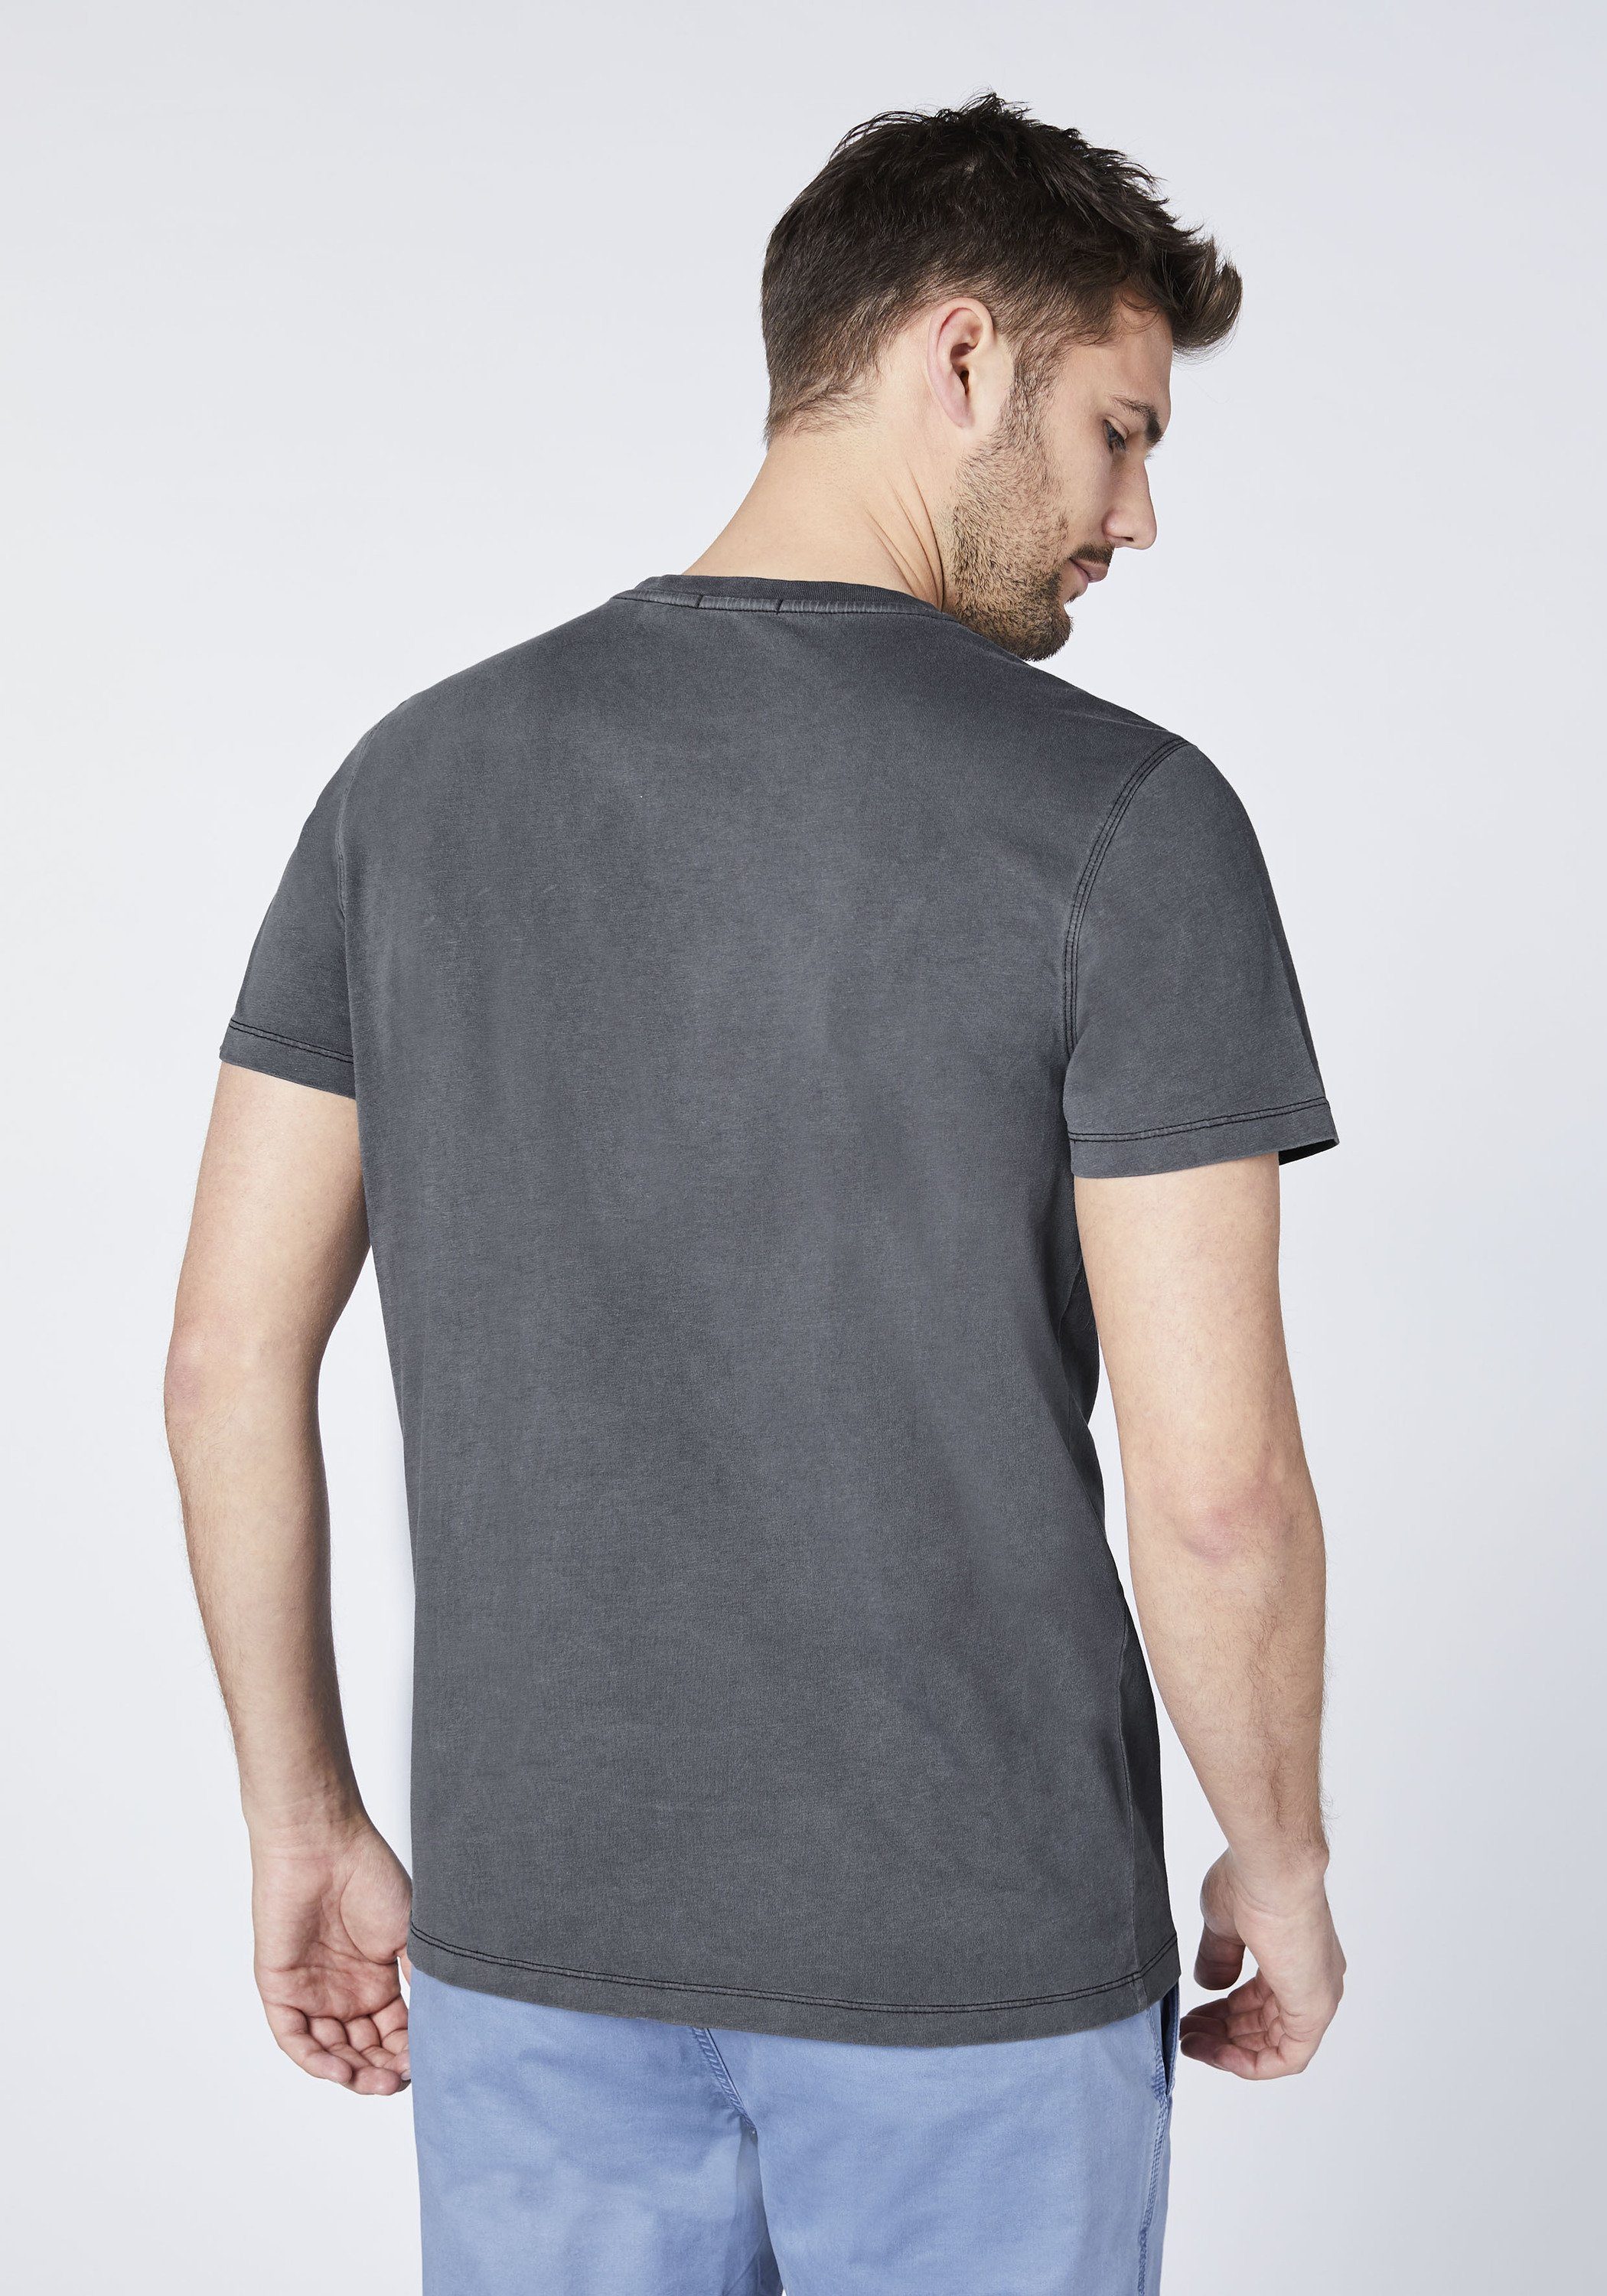 Chiemsee Print-Shirt T-Shirt aus Black Beauty 19-3911 Baumwolle 1